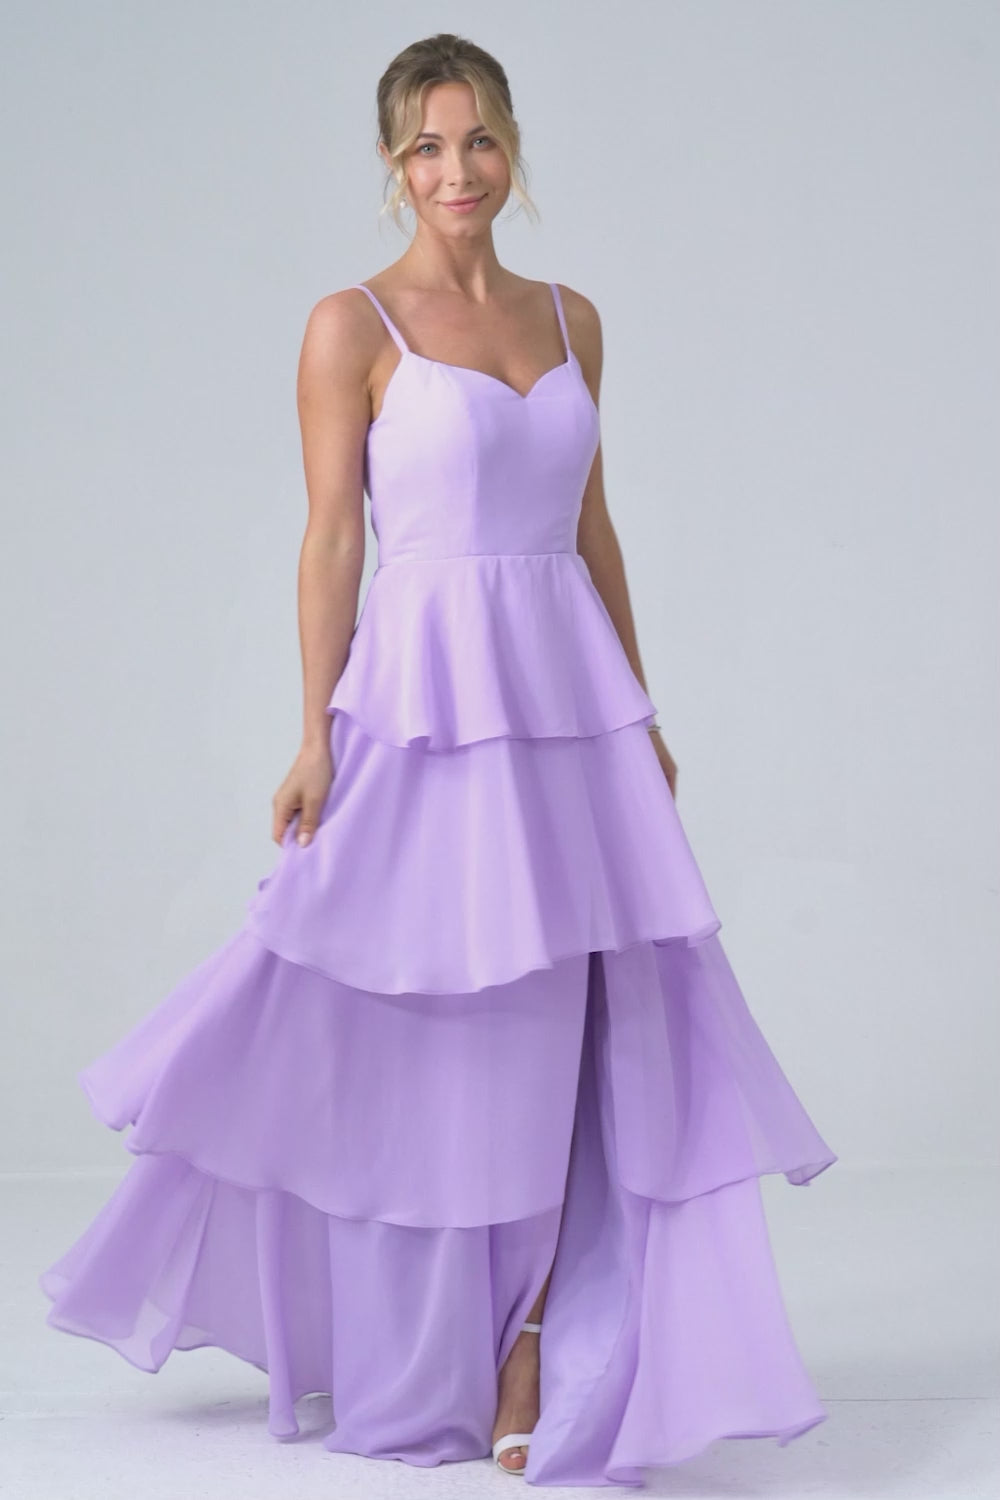 Lilac A Line Spaghetti Straps Tiered Chiffon Bridesmaid Dress with Slit